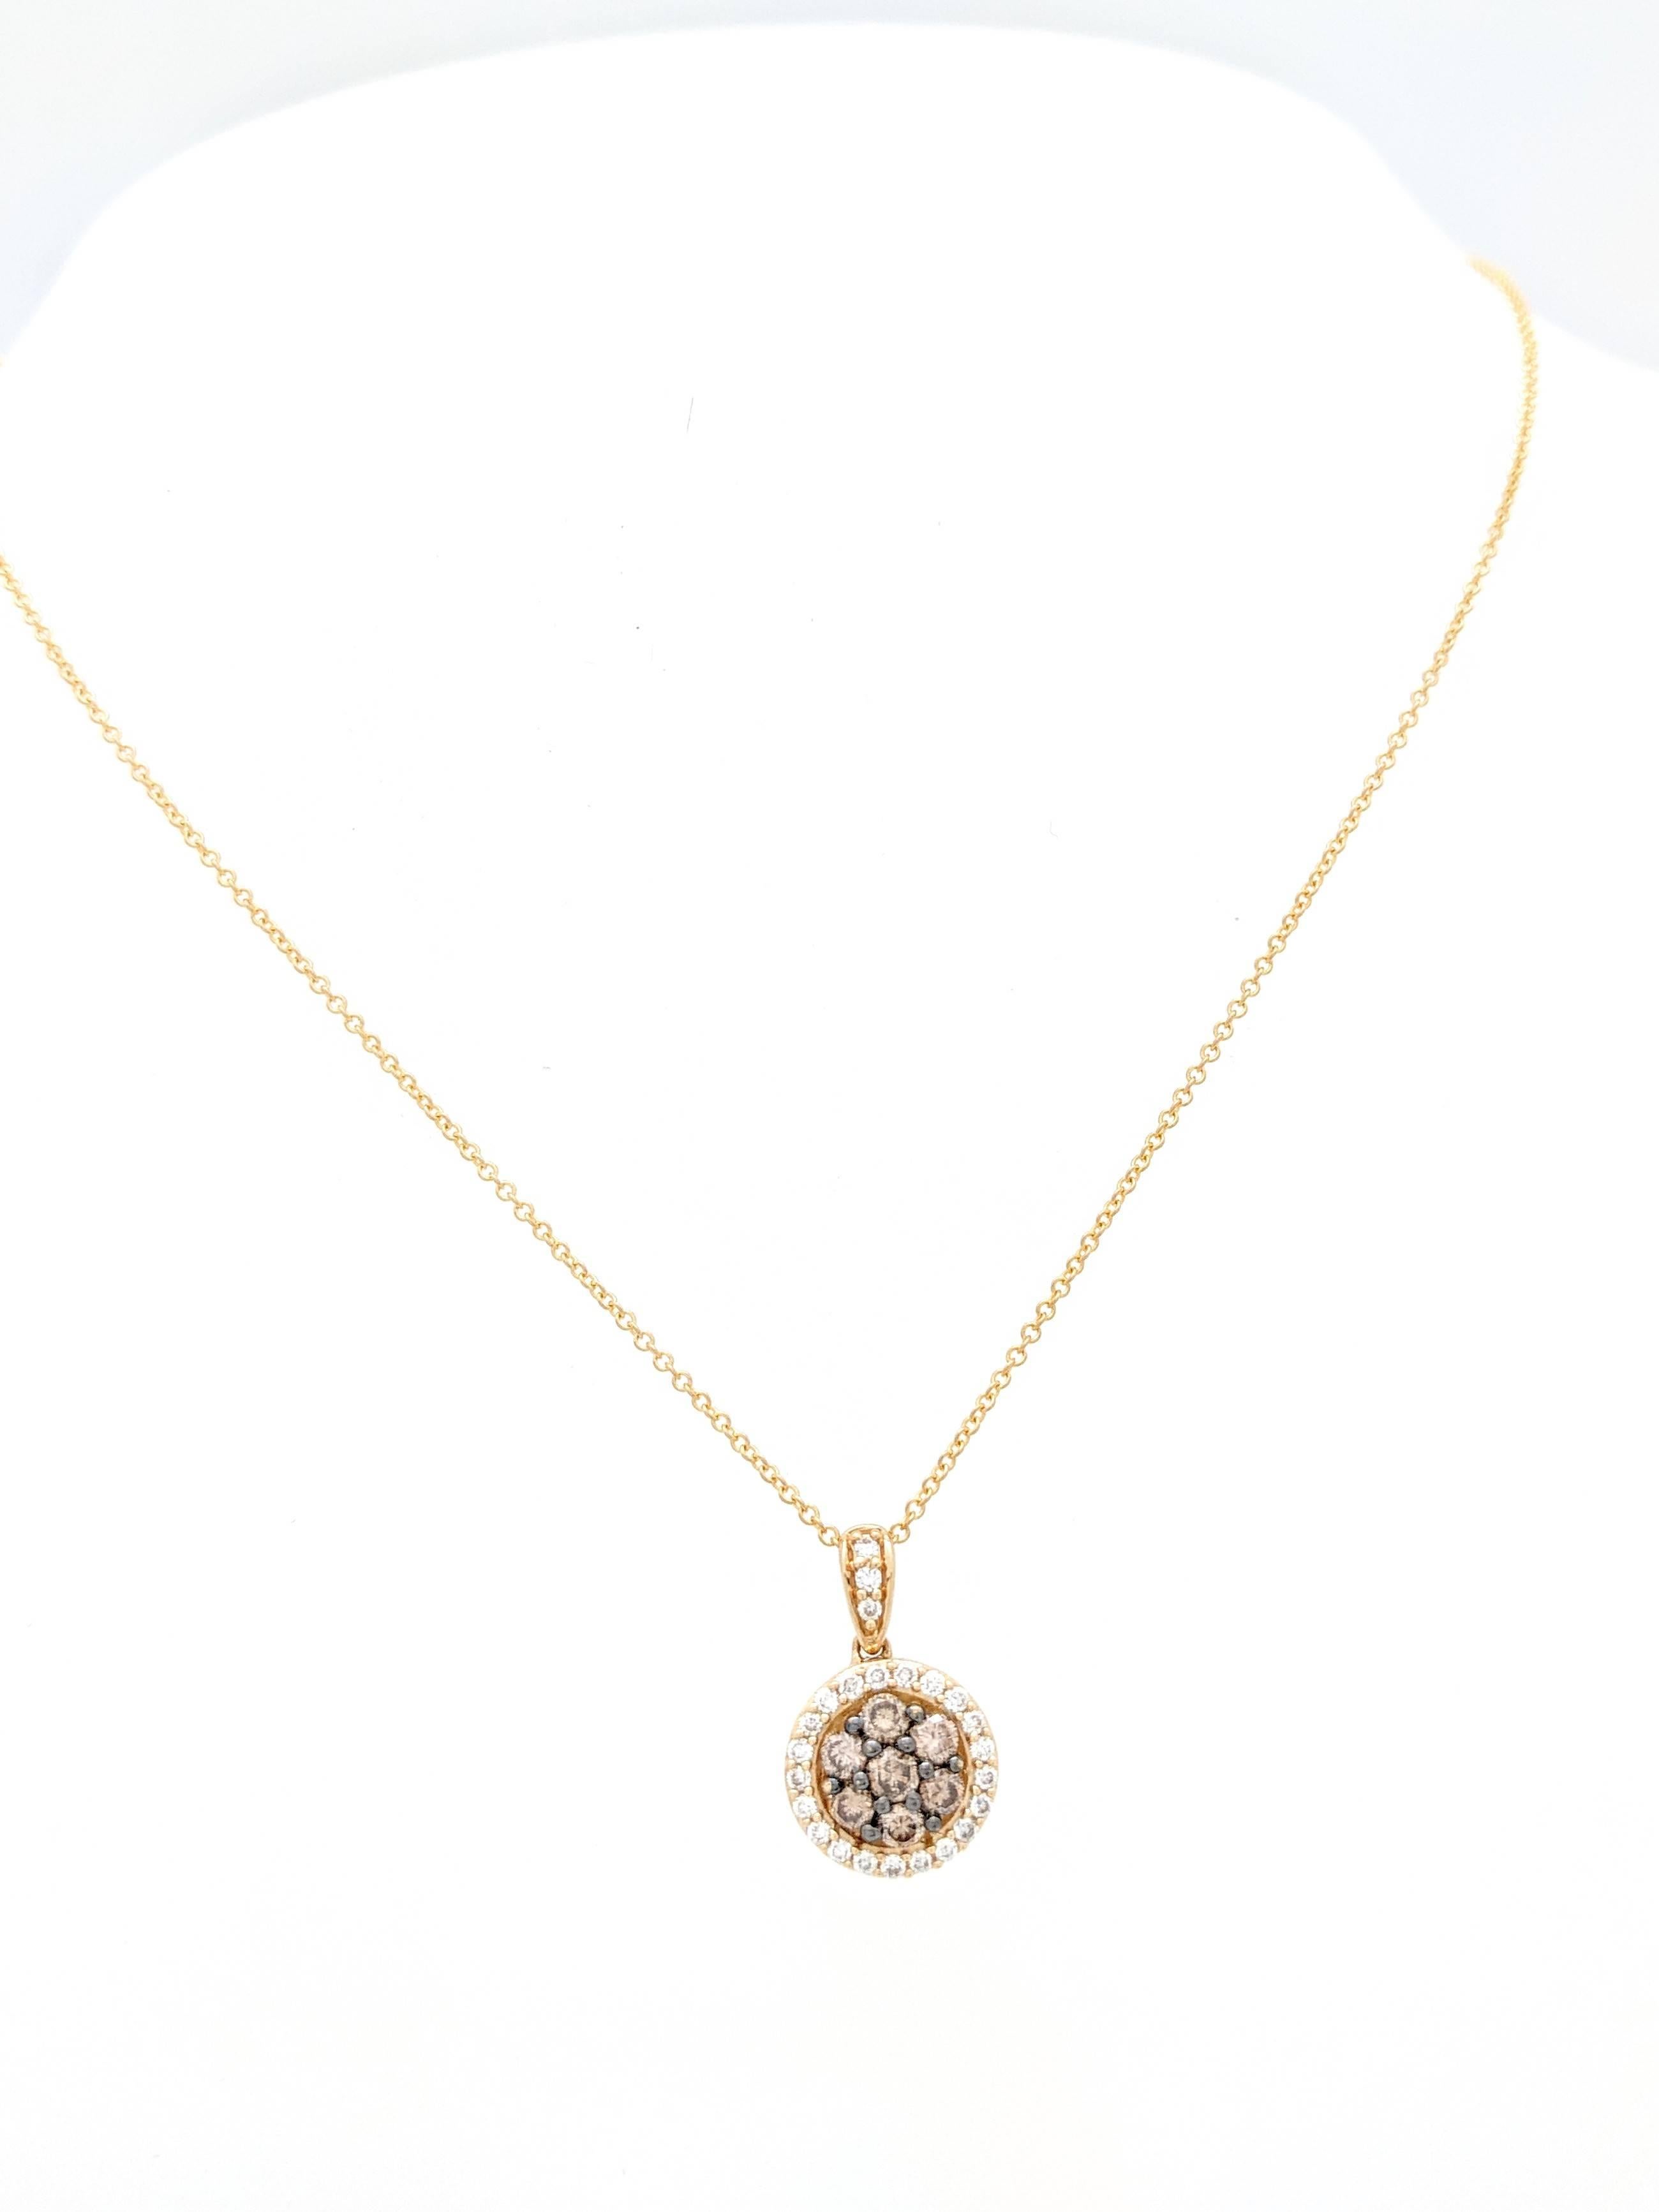 Le Vian Champagne Diamond Halo Pendant Necklace .50ctw in 14K Yellow Gold 18